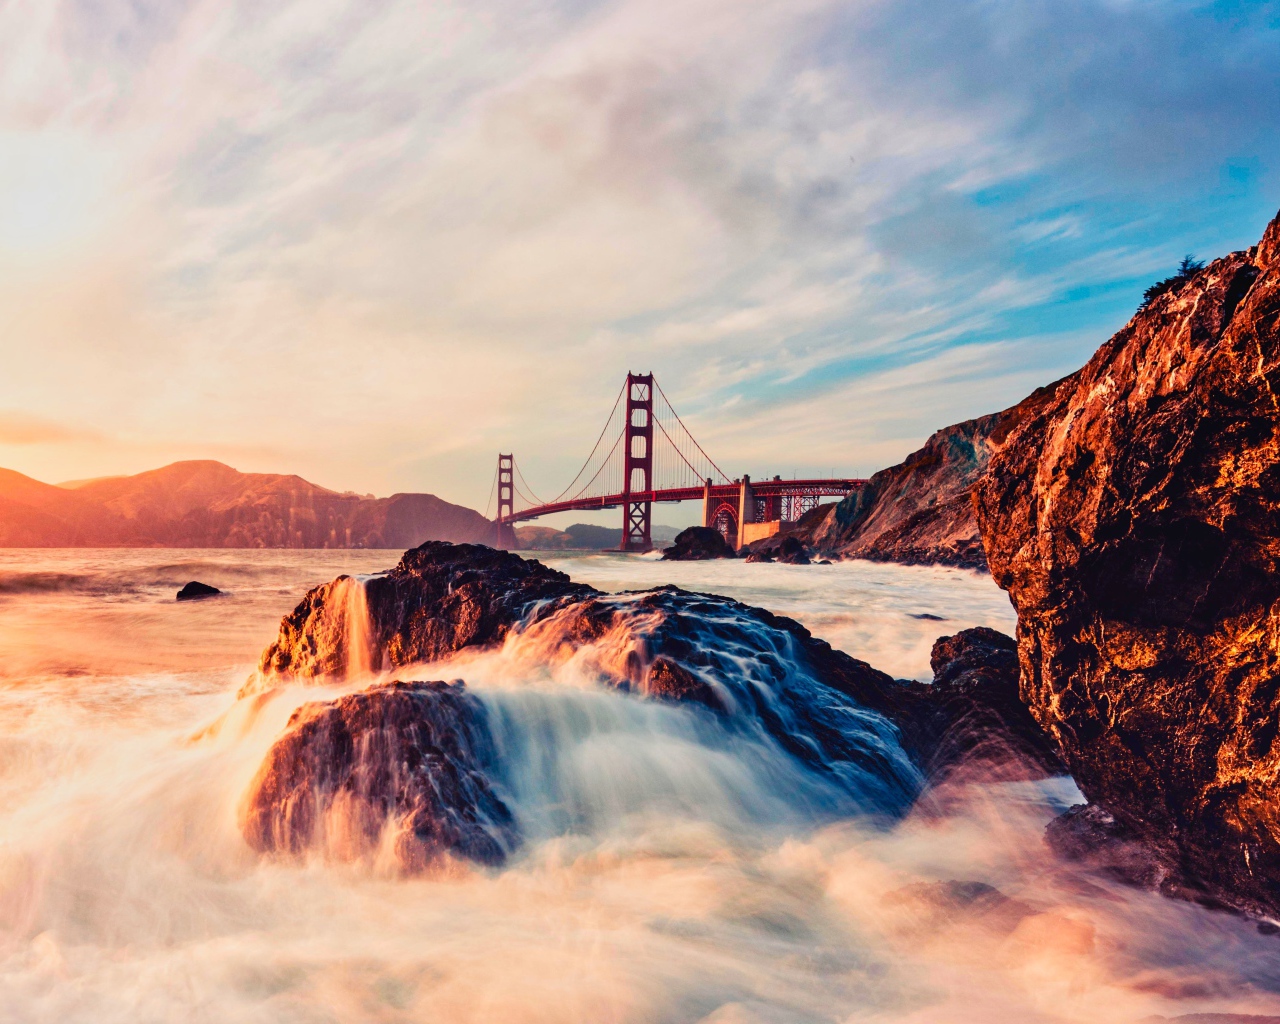 Golden Gate Bridge over a fast river in the sun